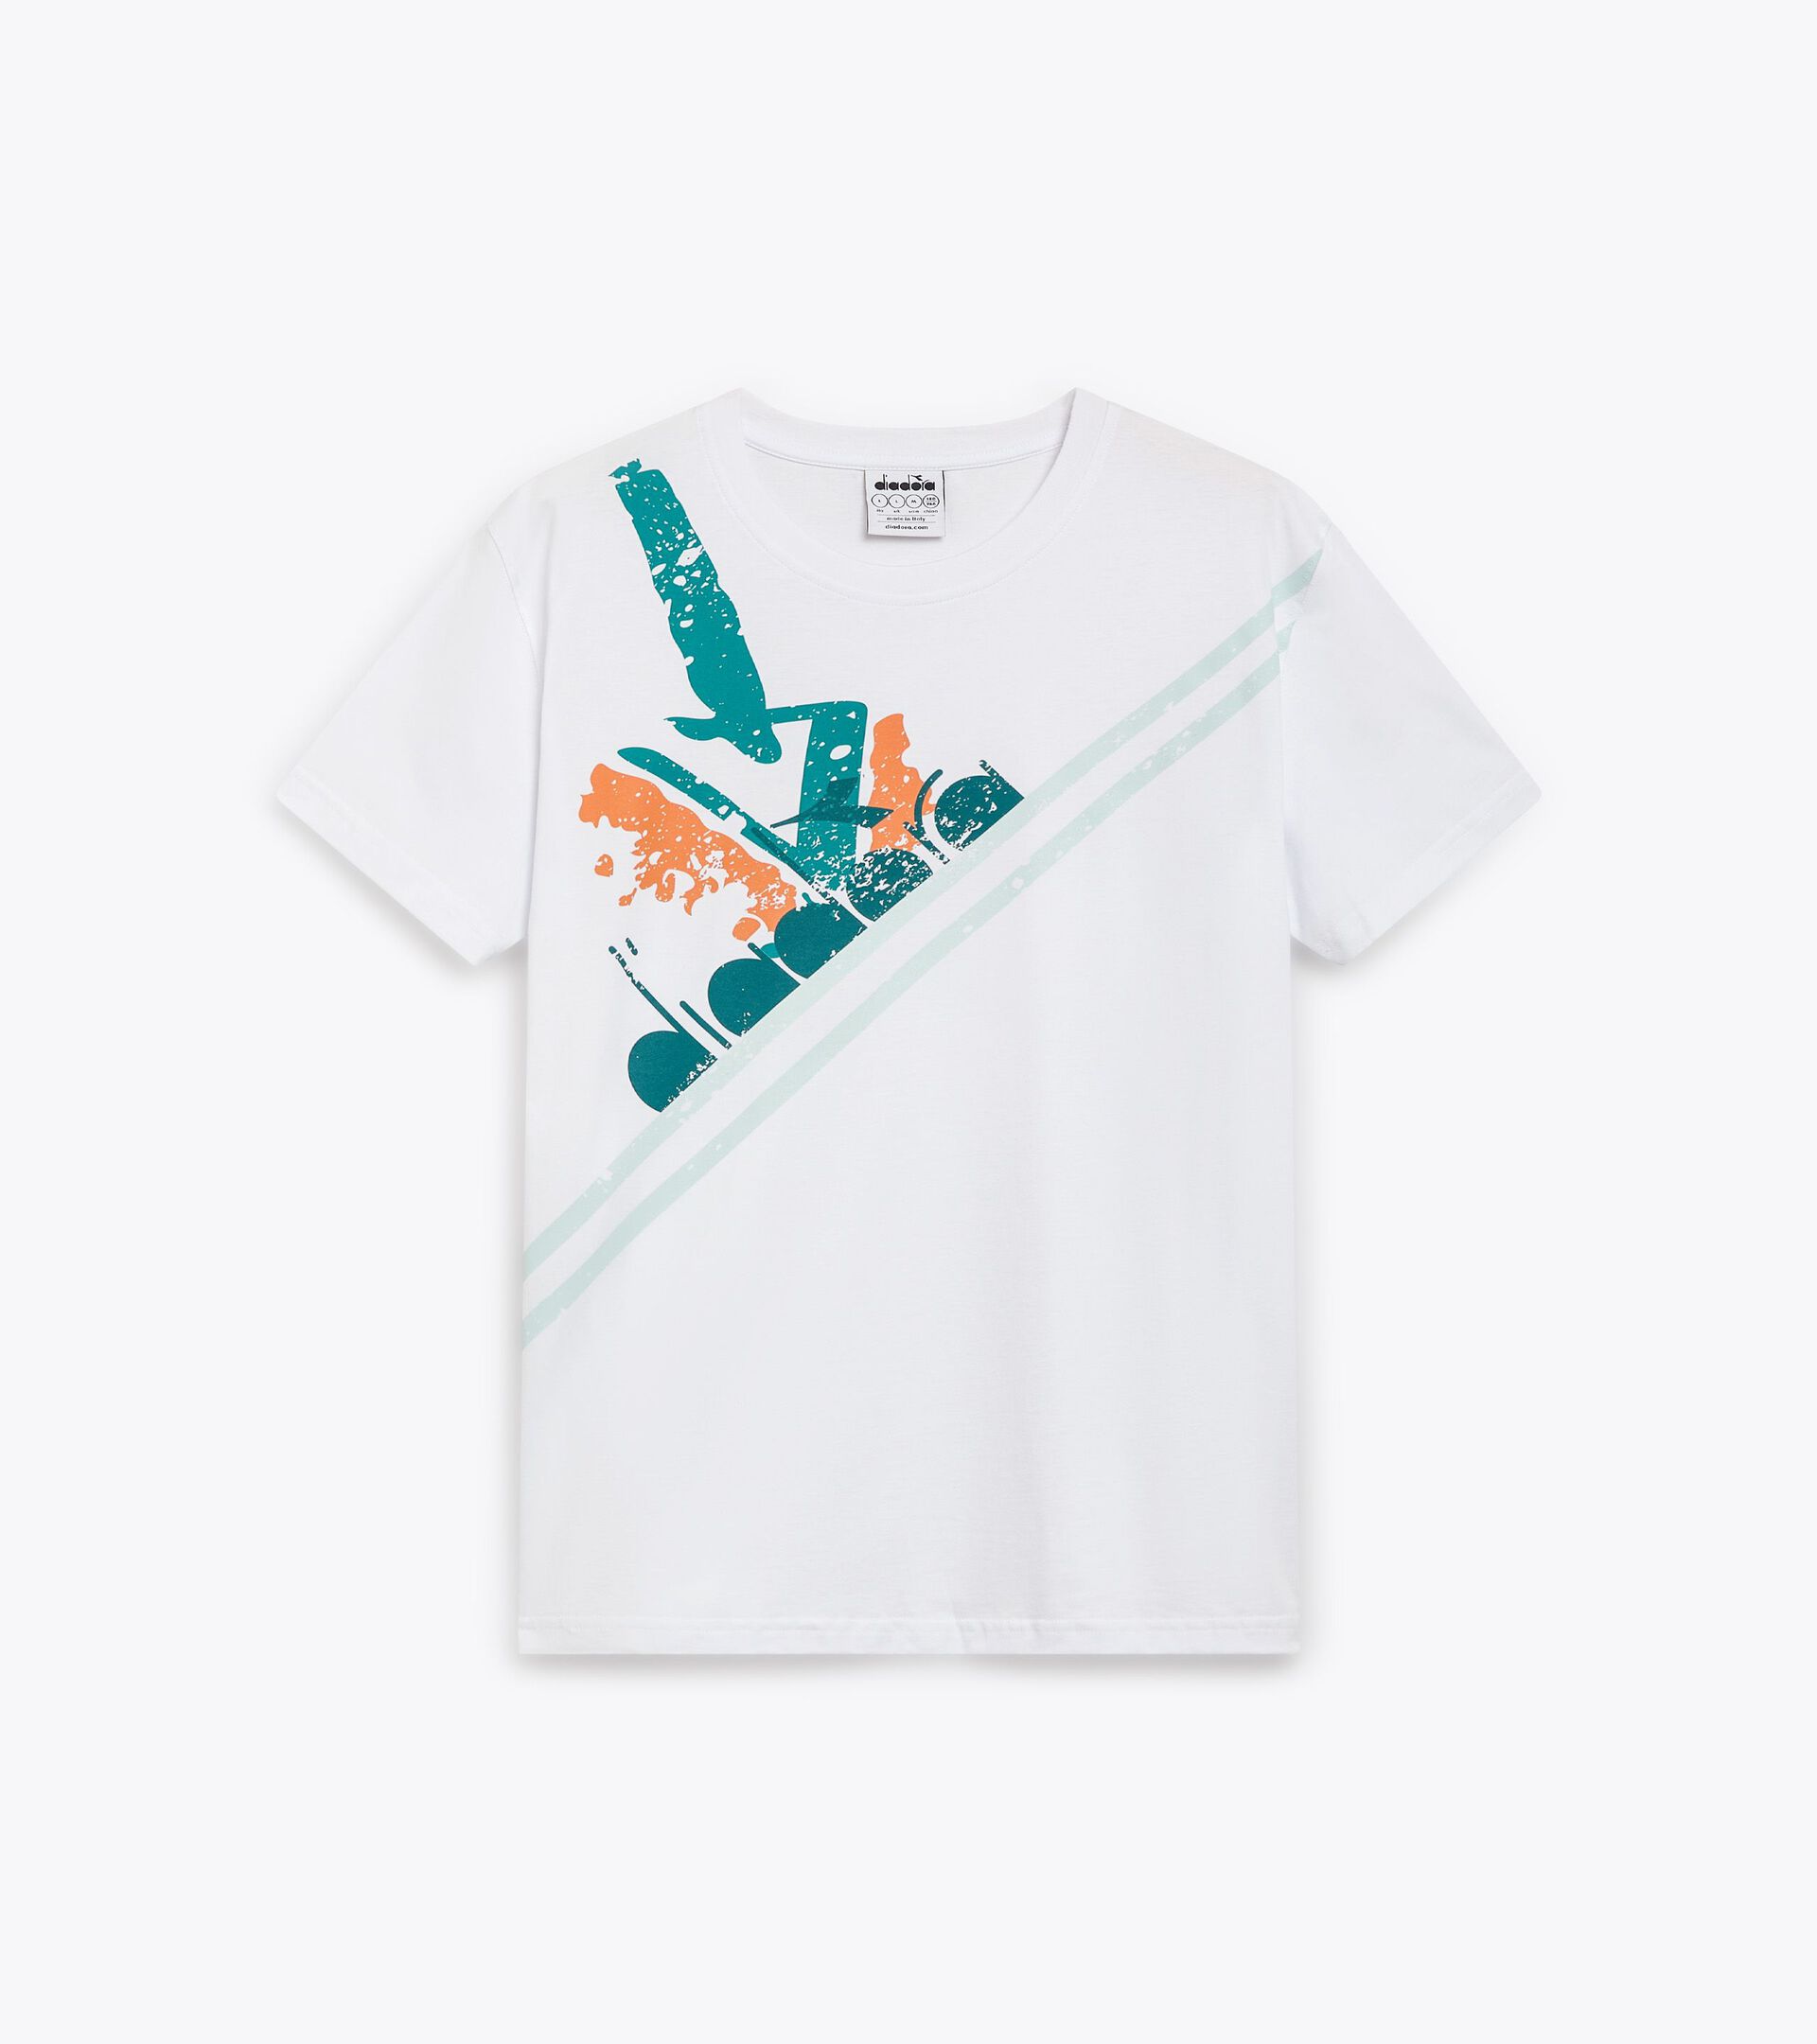 T-shirt sportiva stile anni ‘90 - Made in Italy - Uomo T-SHIRT SS TENNIS 90 VERDE-BLU CAPRI - Diadora